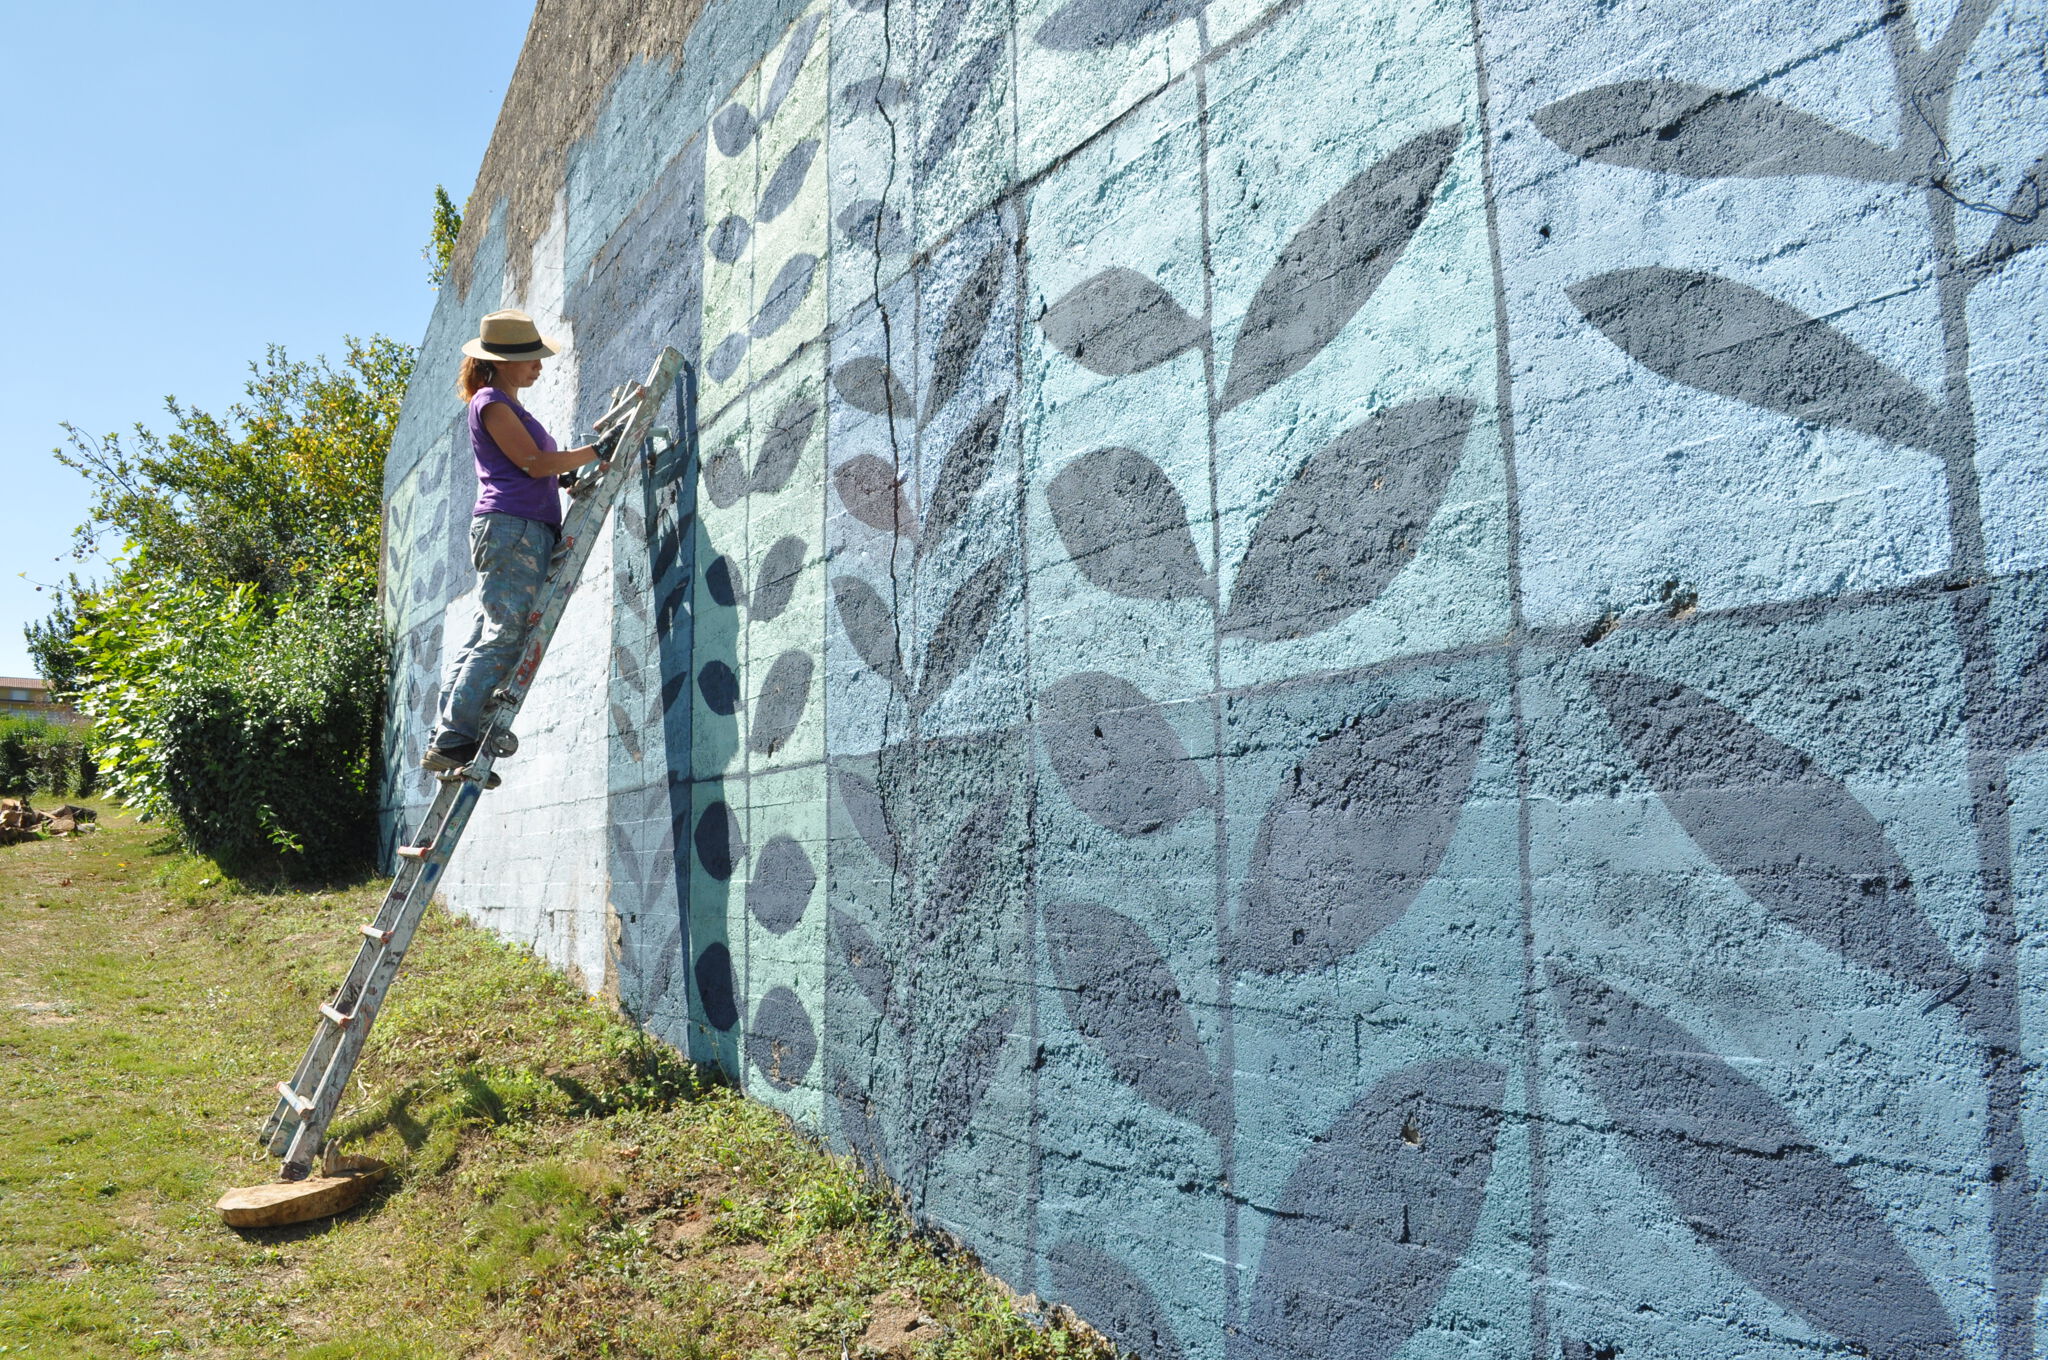 Xoana Almar&mdash;Wall by XOANA ALMAR for DESORDES CREATIVAS 2017 in Ordes (Galicia - Spain)